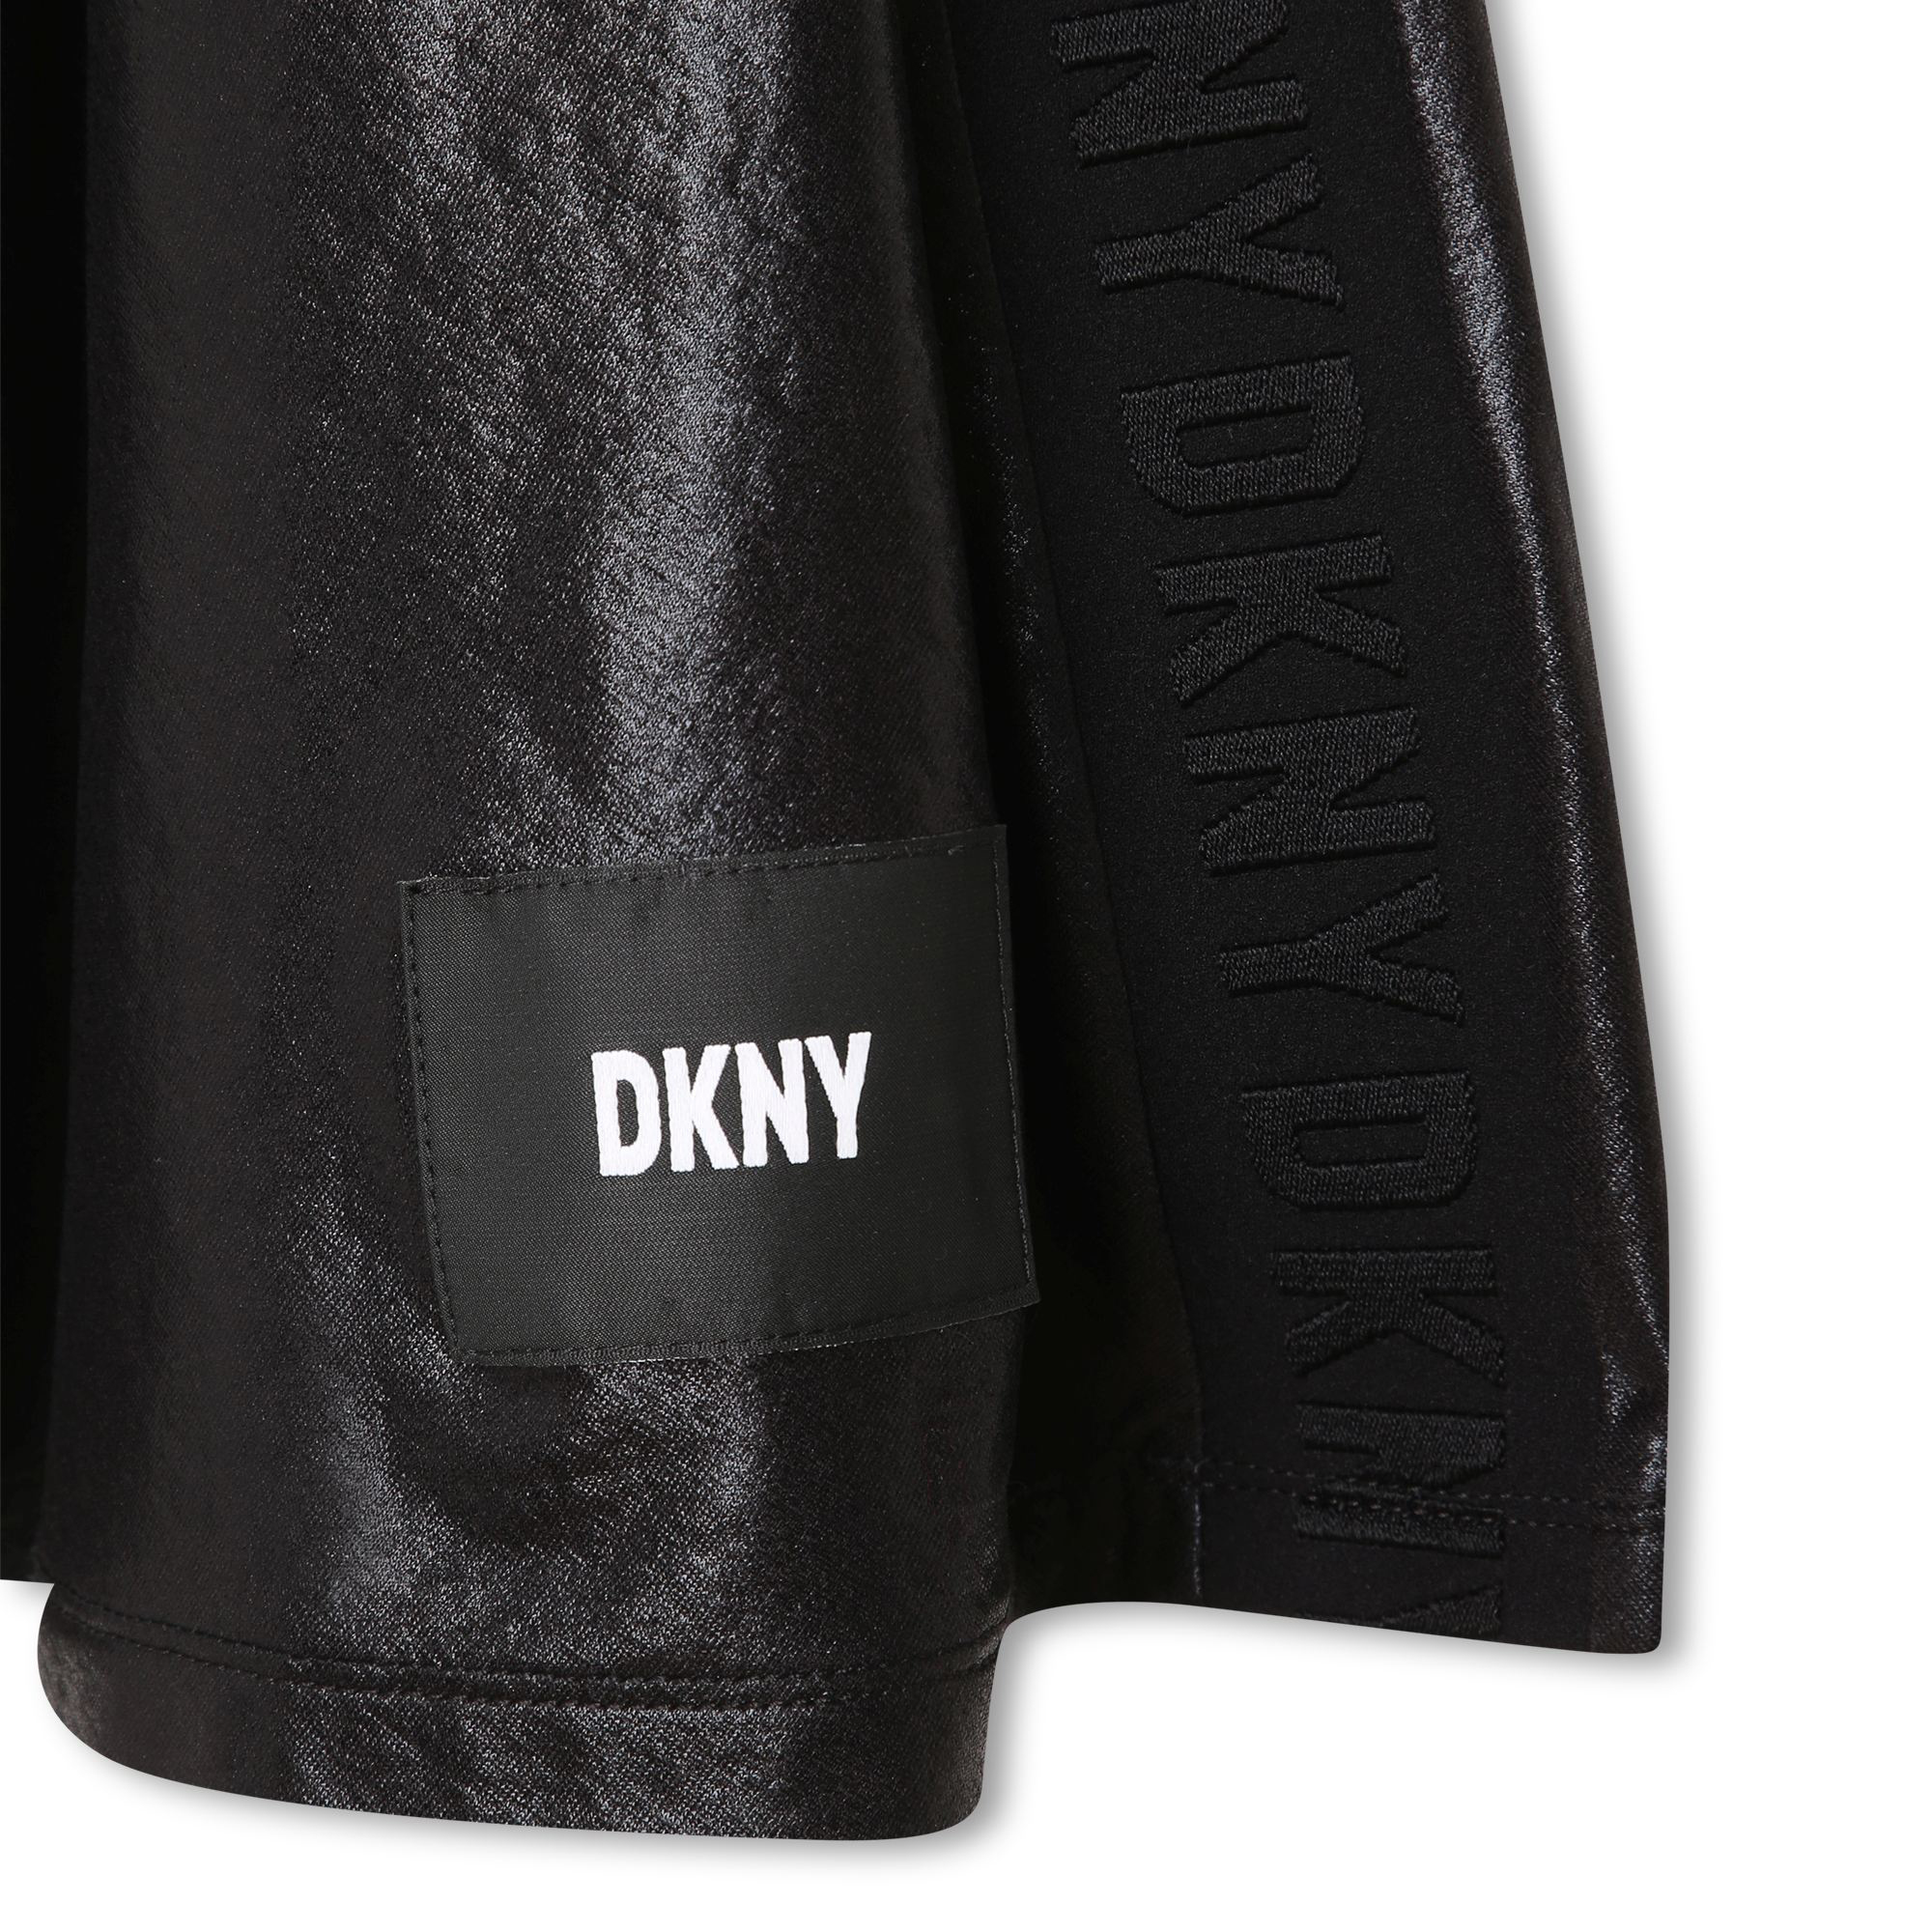 DKNY Two-tone printed leggings